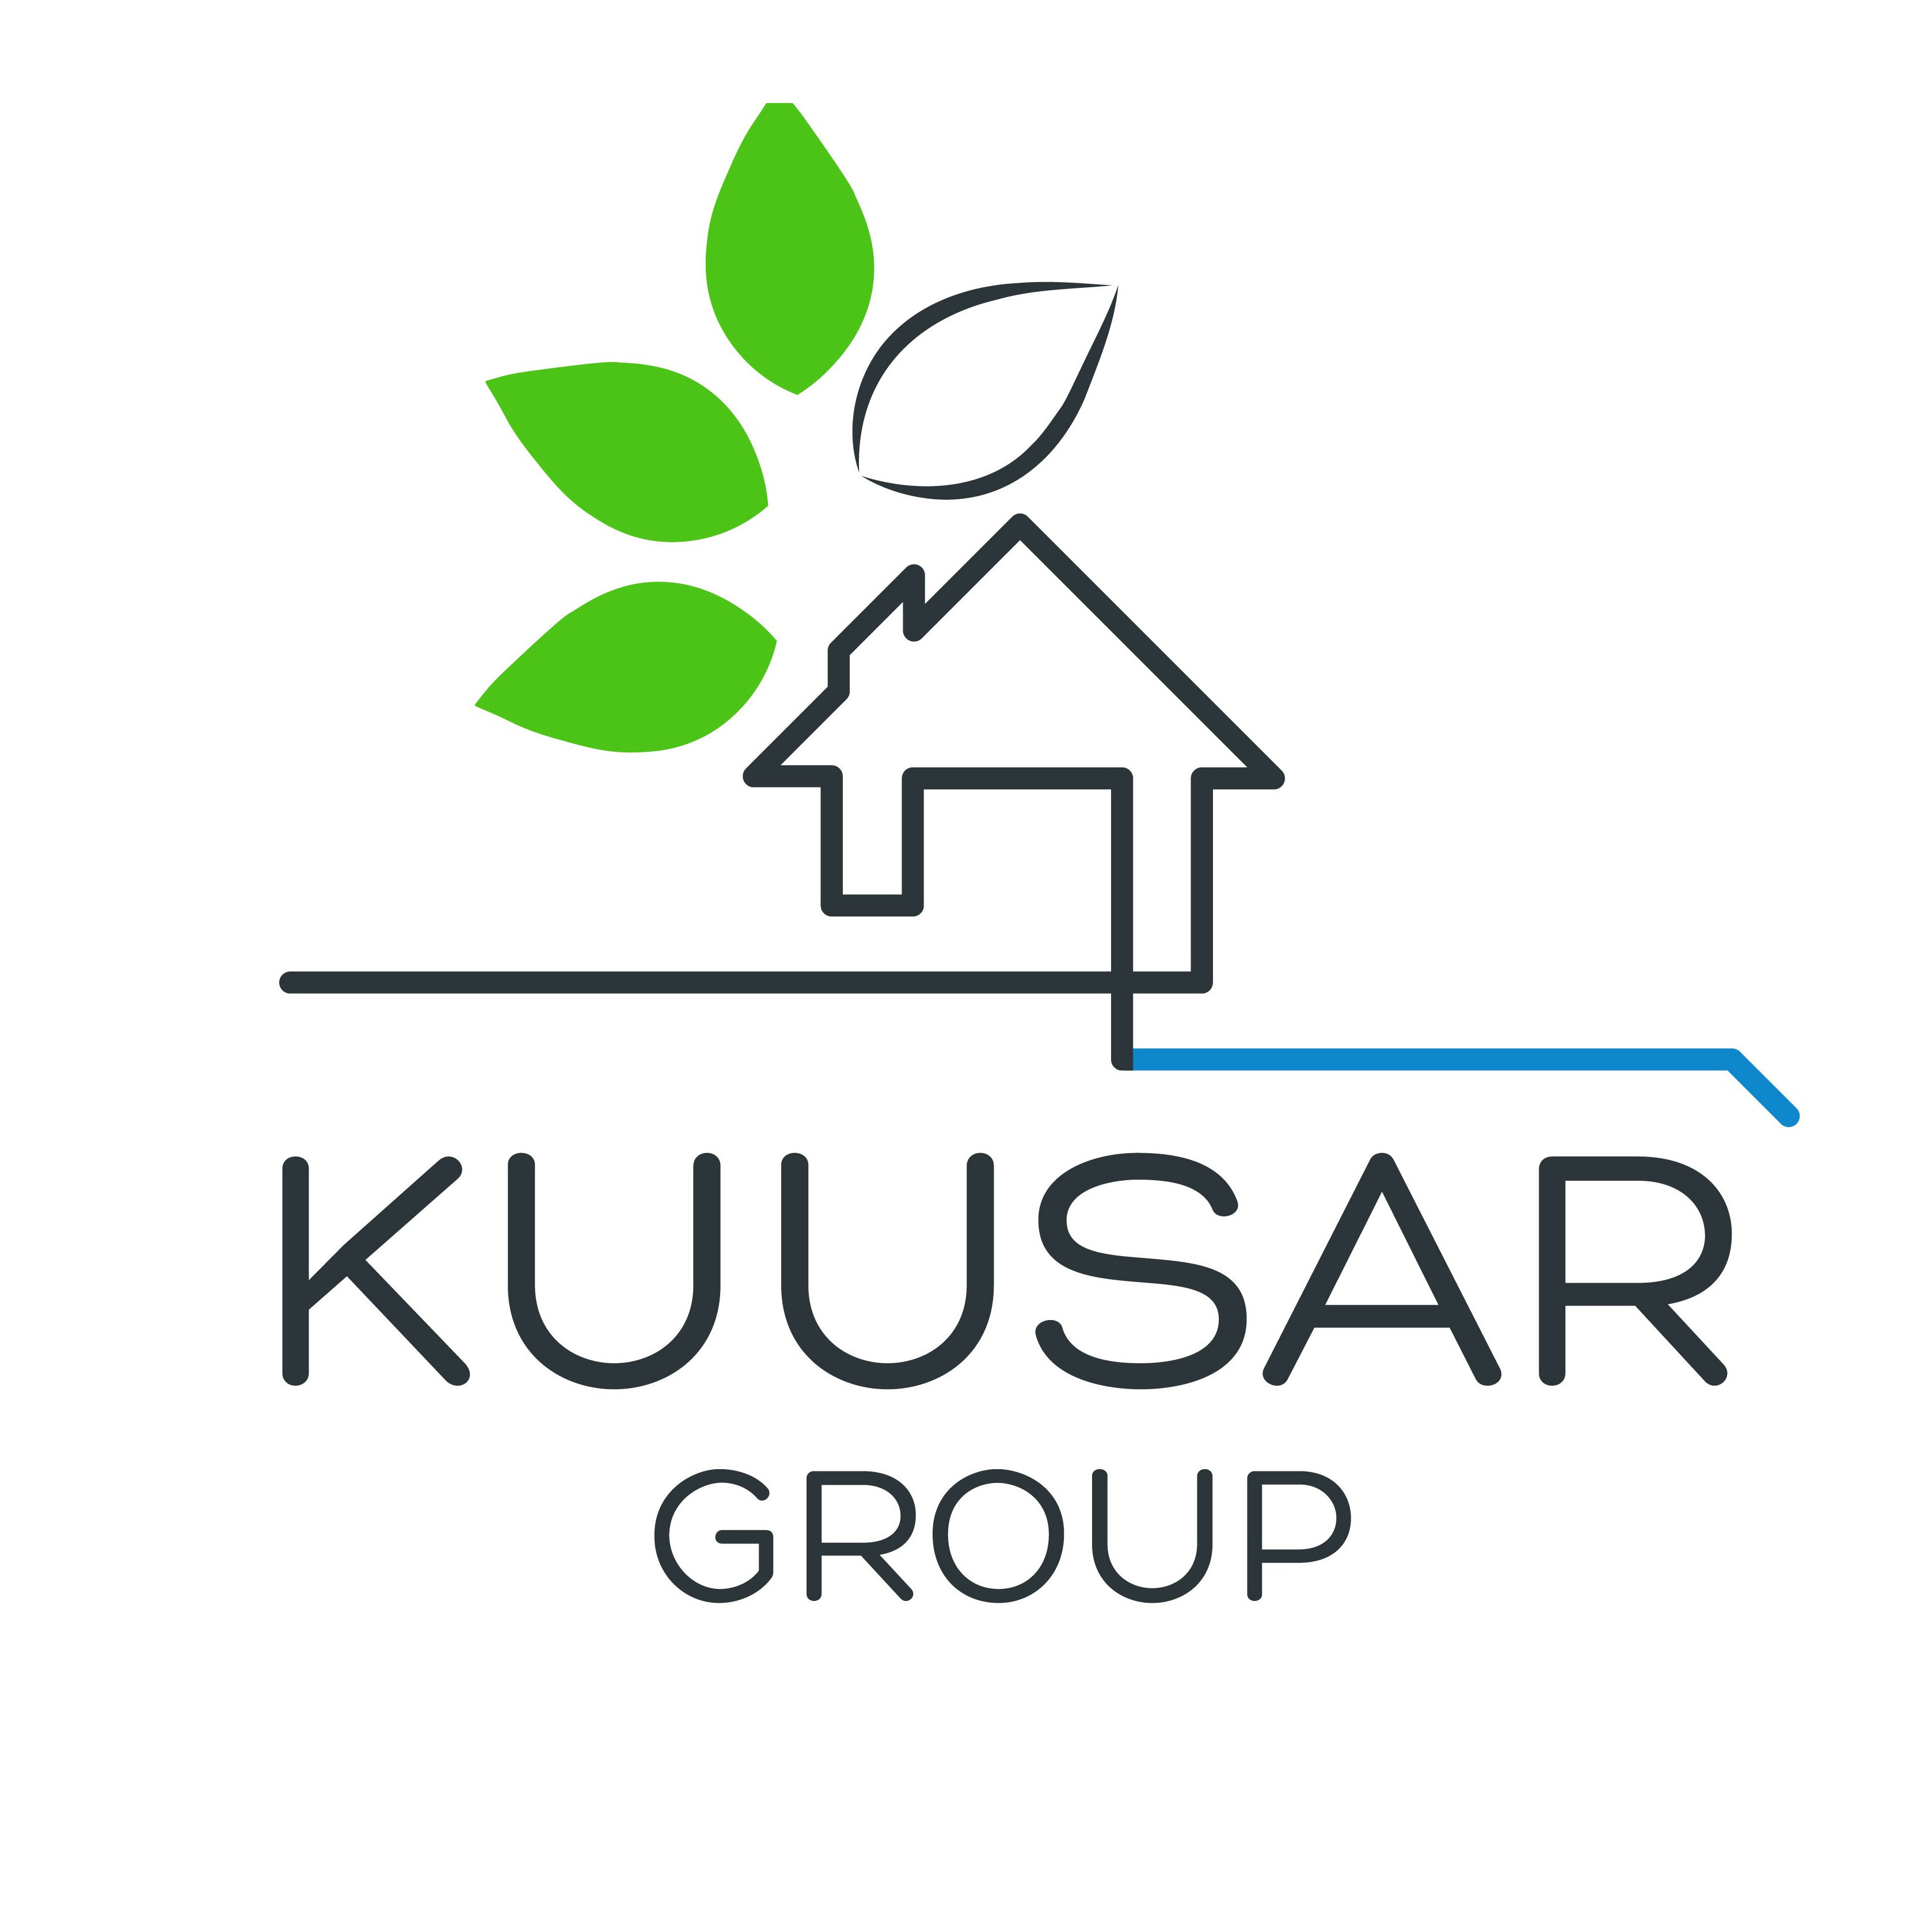 KUUSAR GROUP OÜ logo